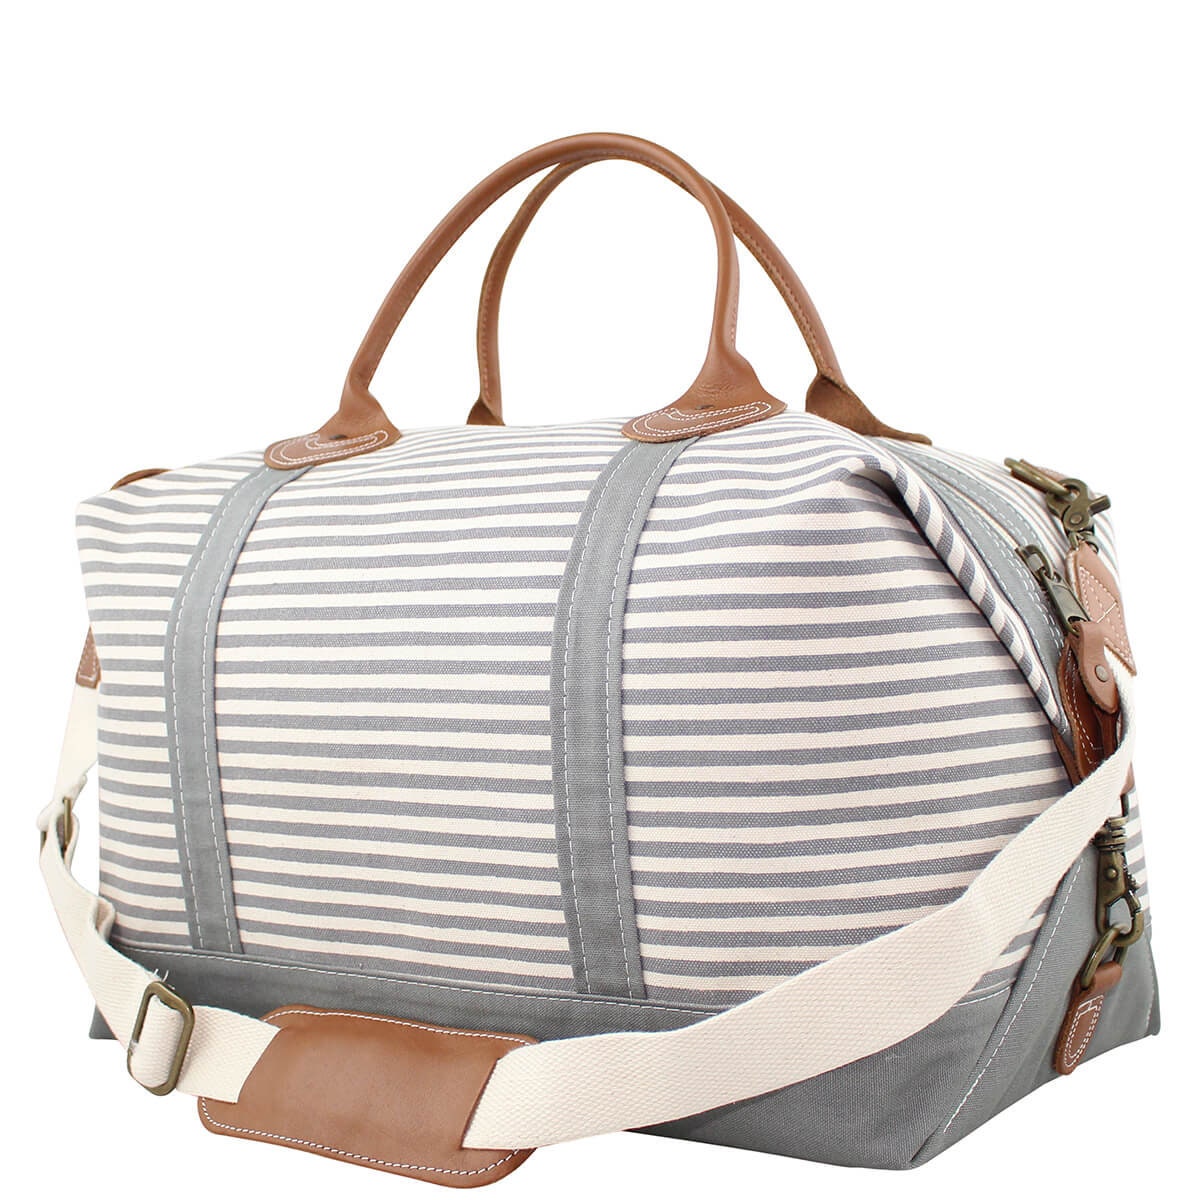 Personalized Monogram Travel Bag Monogrammed Travel Bag | Etsy